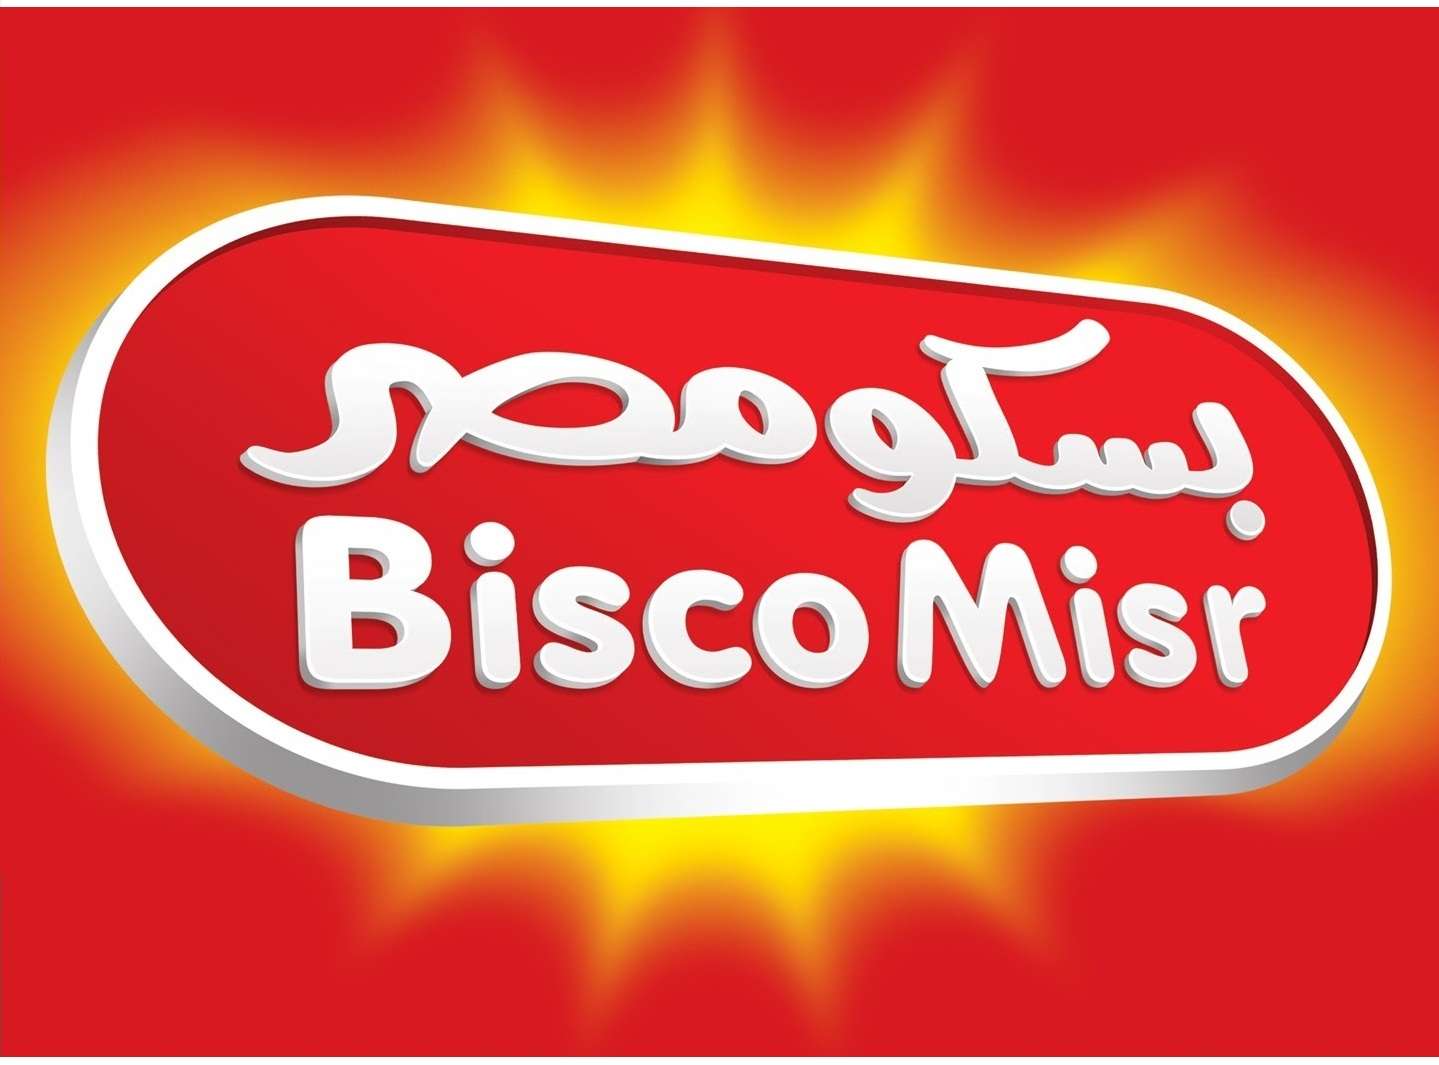 All vendors :: Bisco Misr